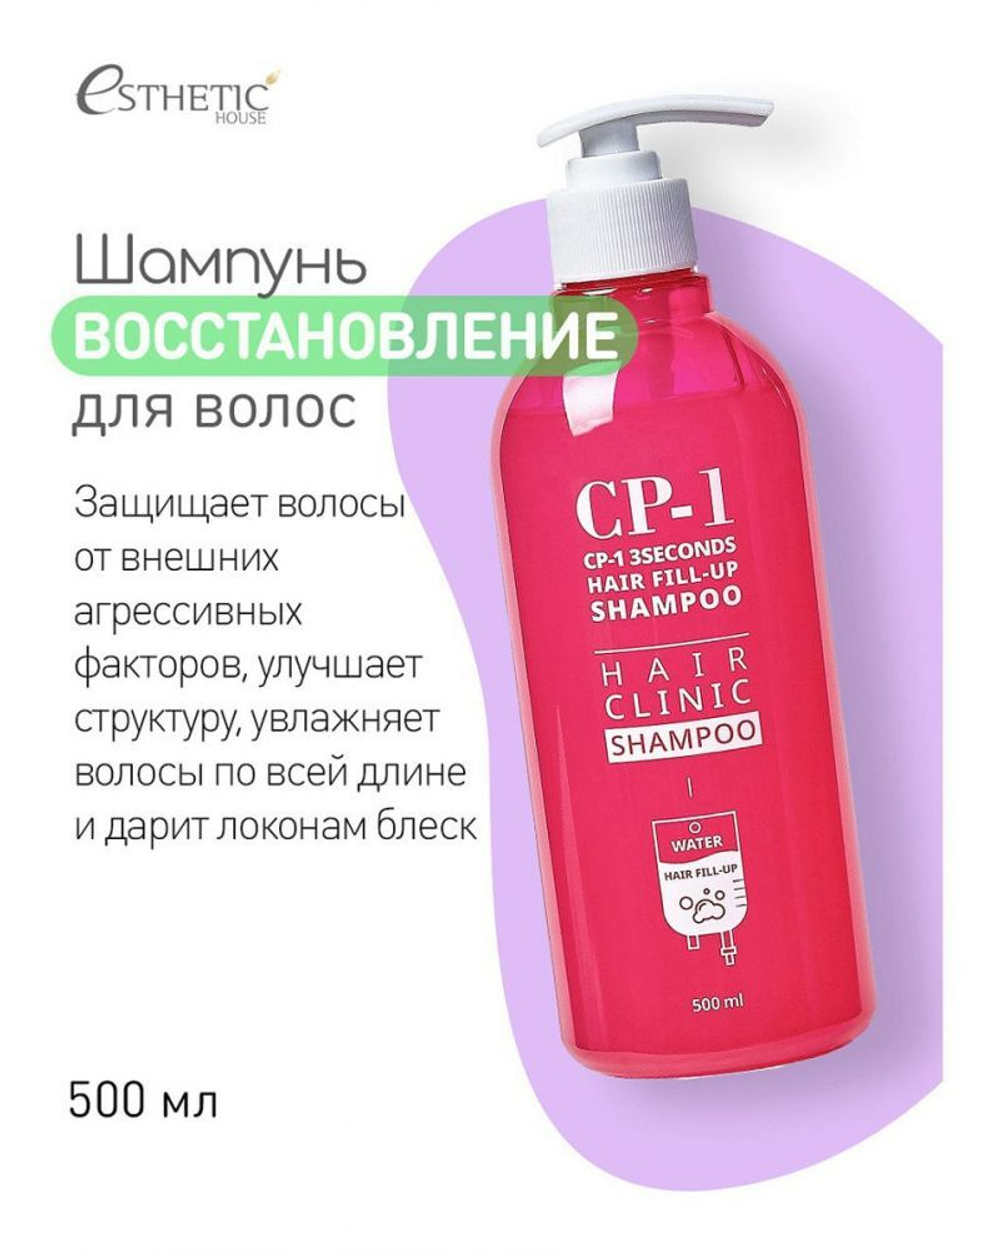 Шампунь-филлер для волос - Esthetic House CP-1 3Seconds hair fill-up shampoo, 100 мл